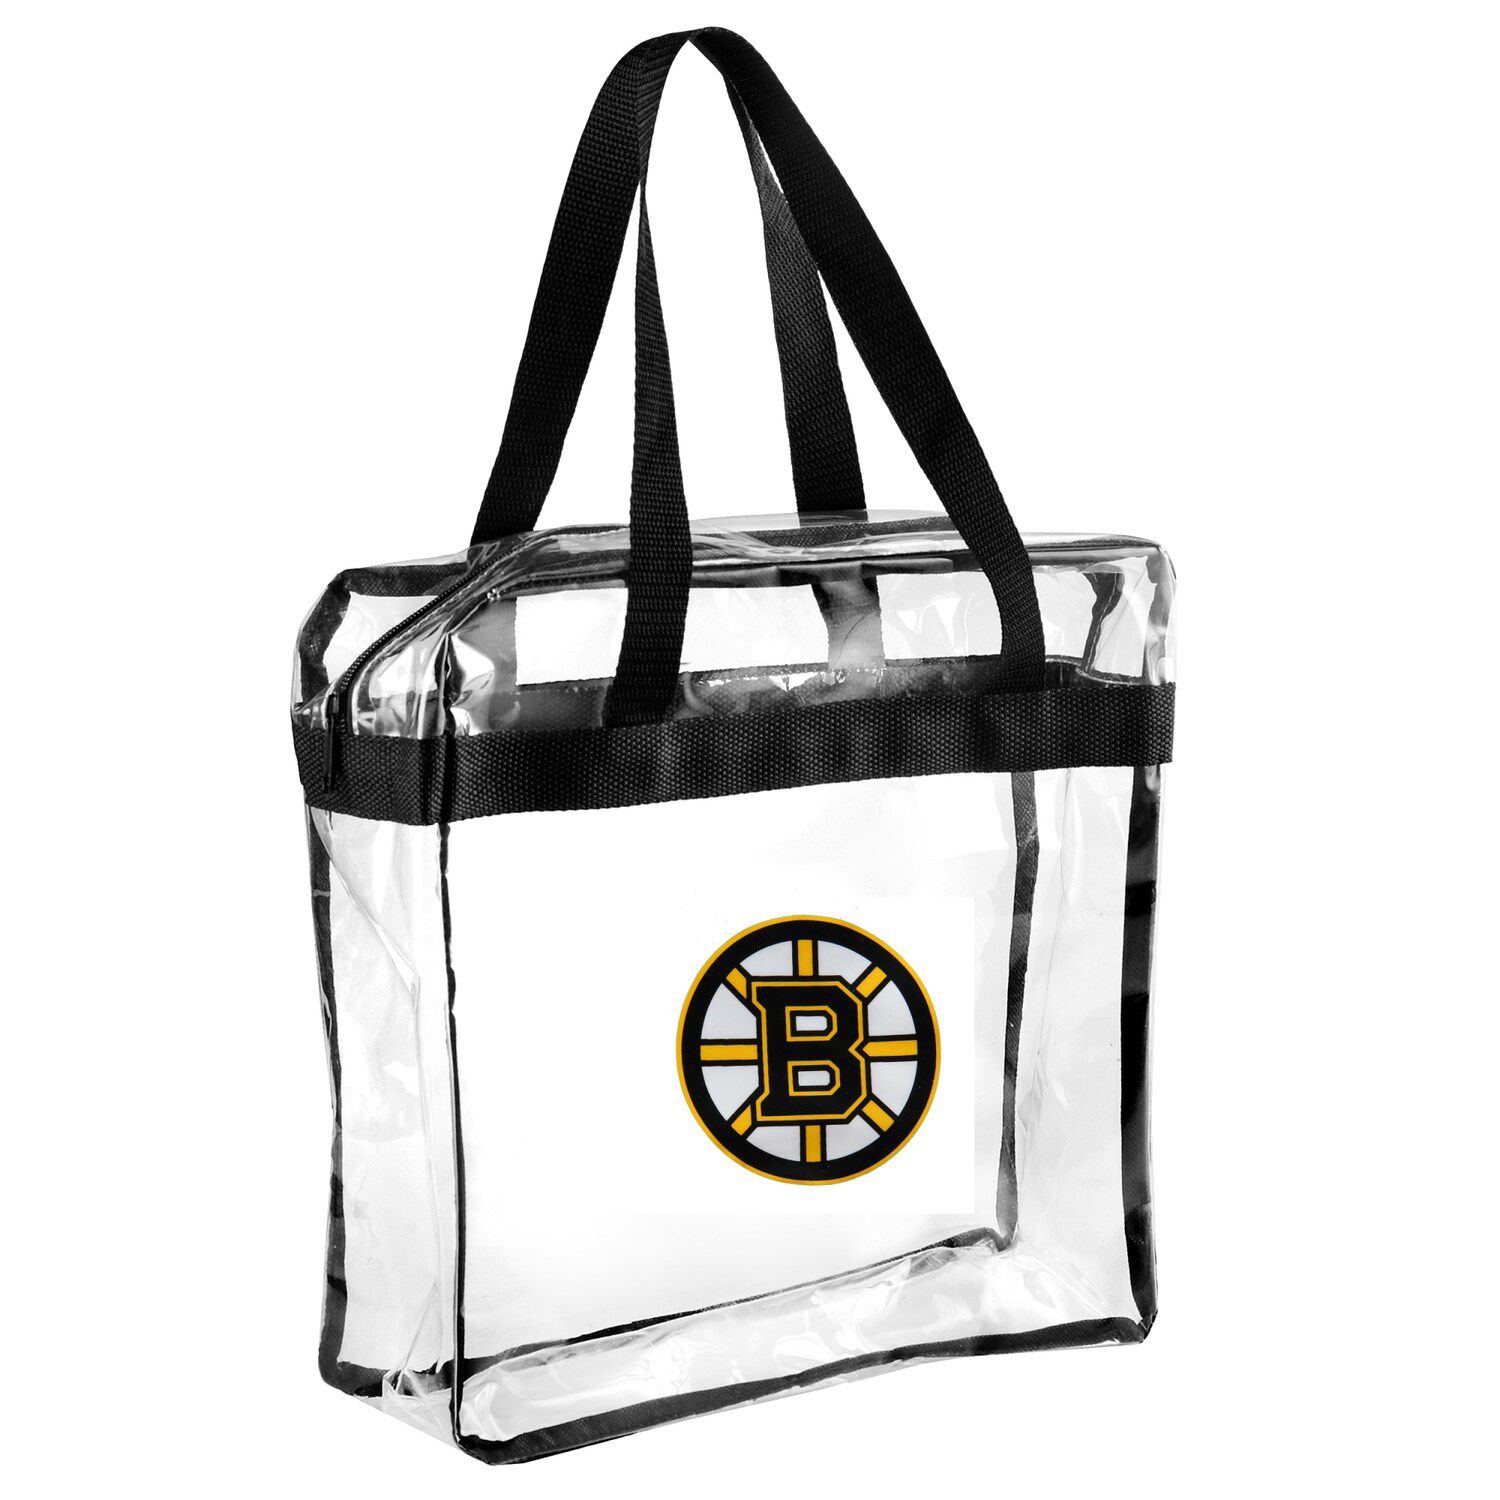 Image for Unbranded Boston Bruins Clear Messenger Basic Tote Bag at Kohl's.